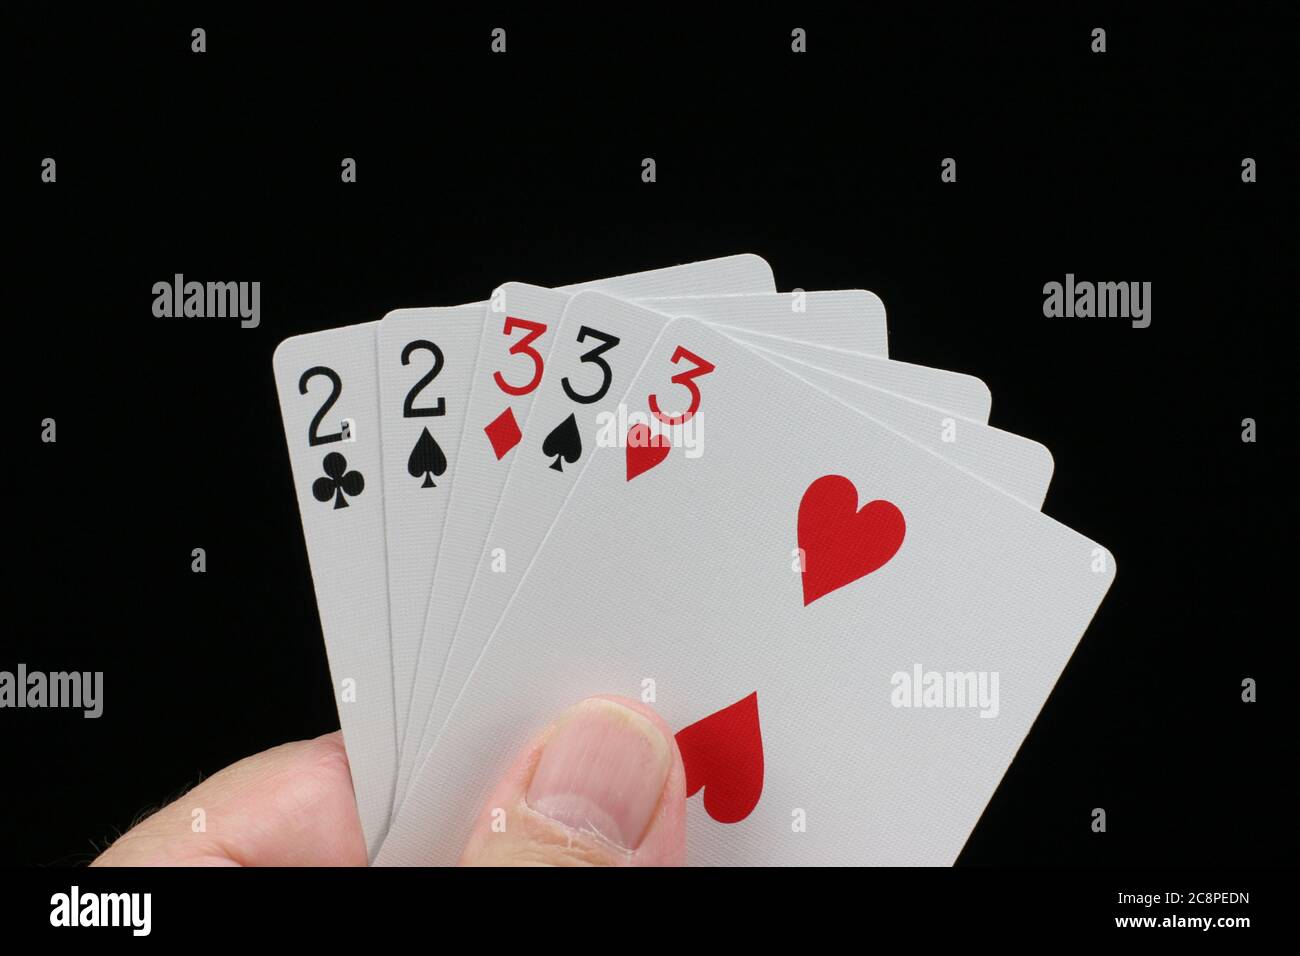 Hand holding full house poker hand on black background. Stock Photo